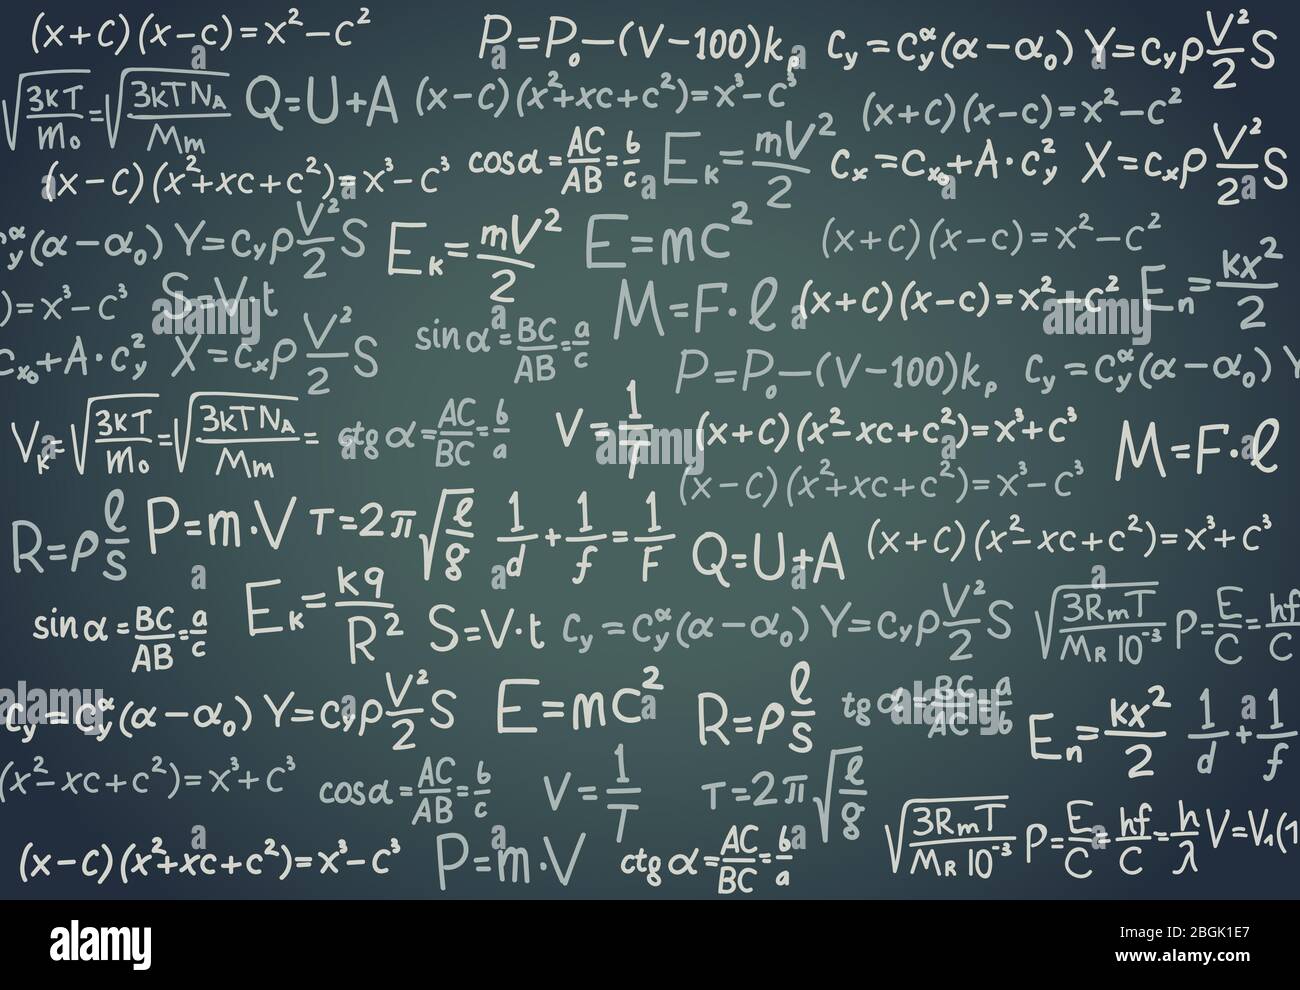 Black board with scientific formula. Algebra, mathematics and physics functions on chalkboard. School education vector background. Illustration of formula trigonometry handwriting Stock Vector